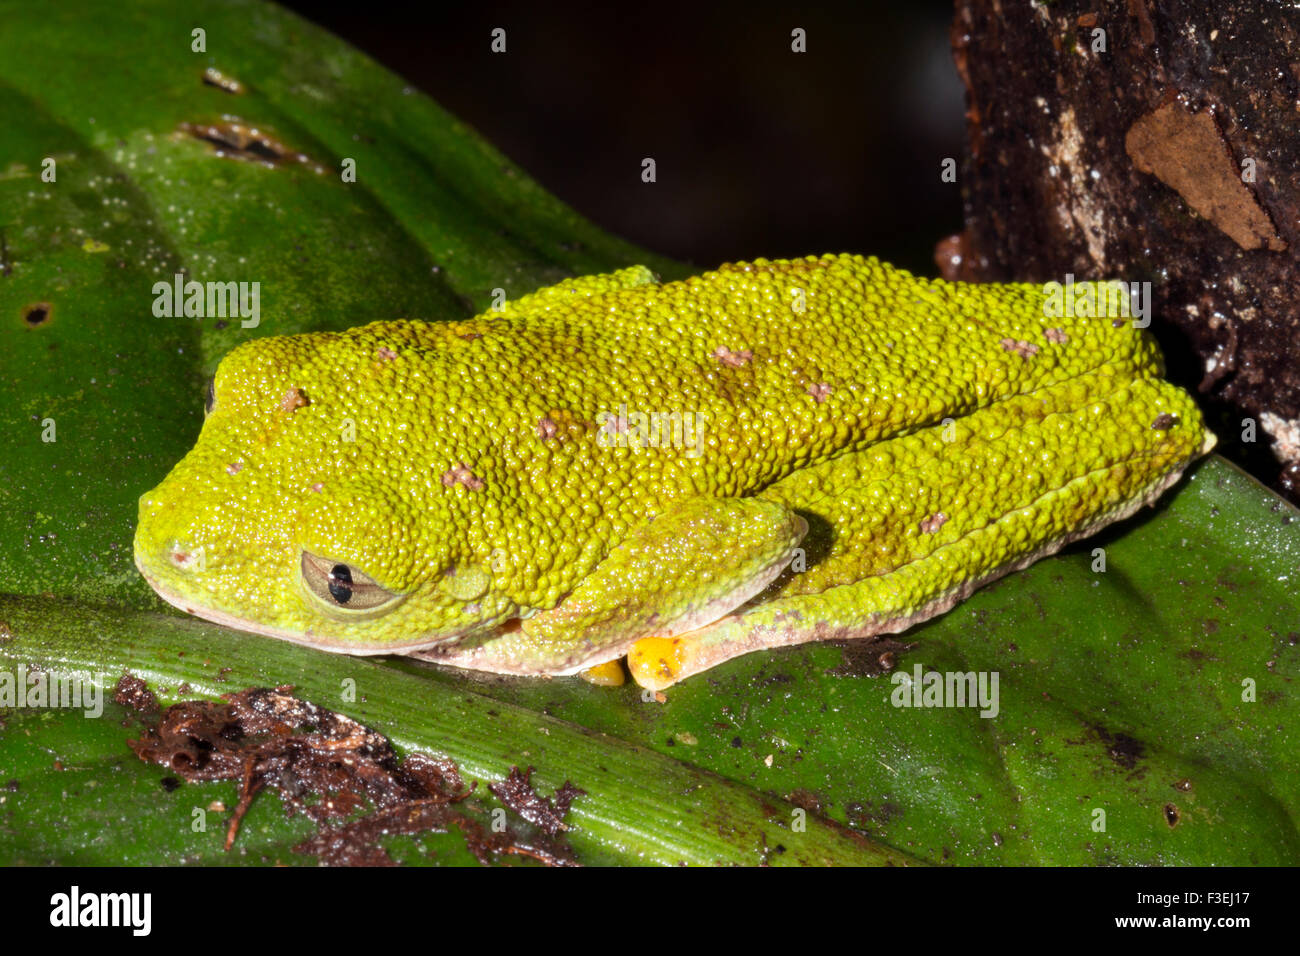 Amazon Leaf Frog (Agalychnis hulli) on a leaf in the rainforest, Ecuador Stock Photo